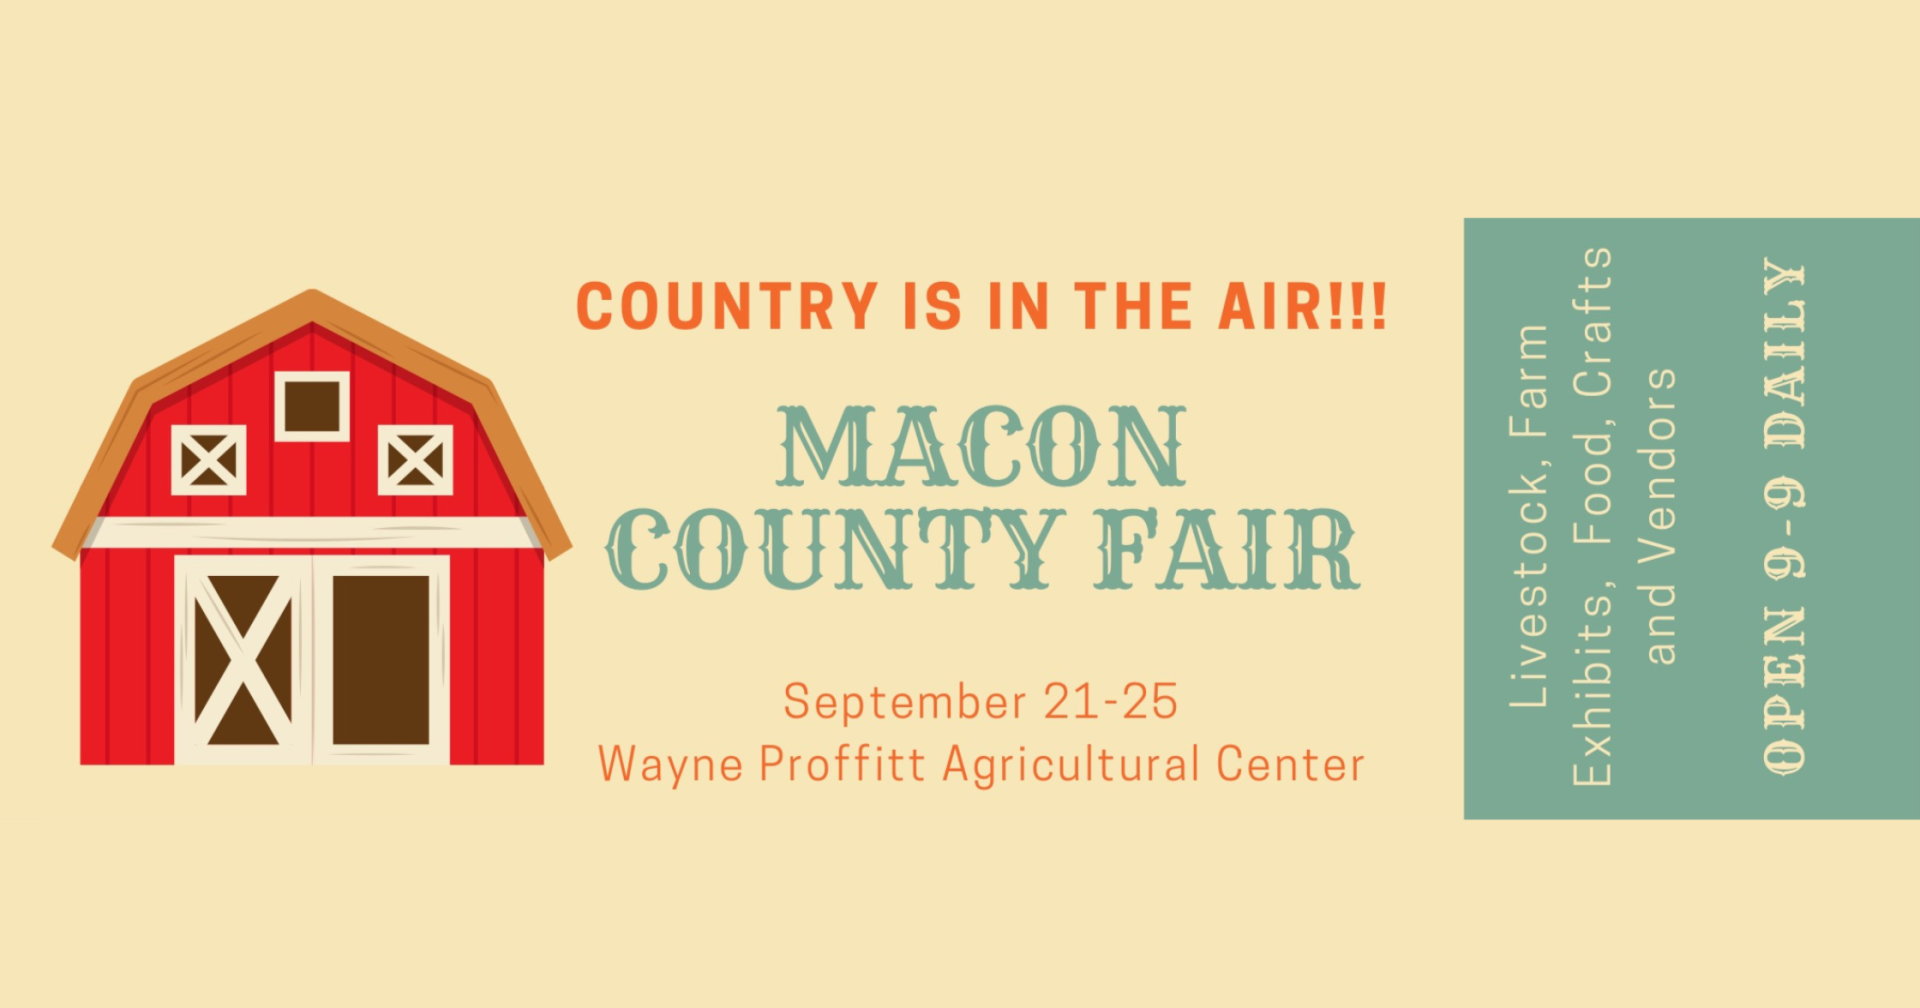 Macon County Fairgrounds 1436 Road, Franklin, NC 28734